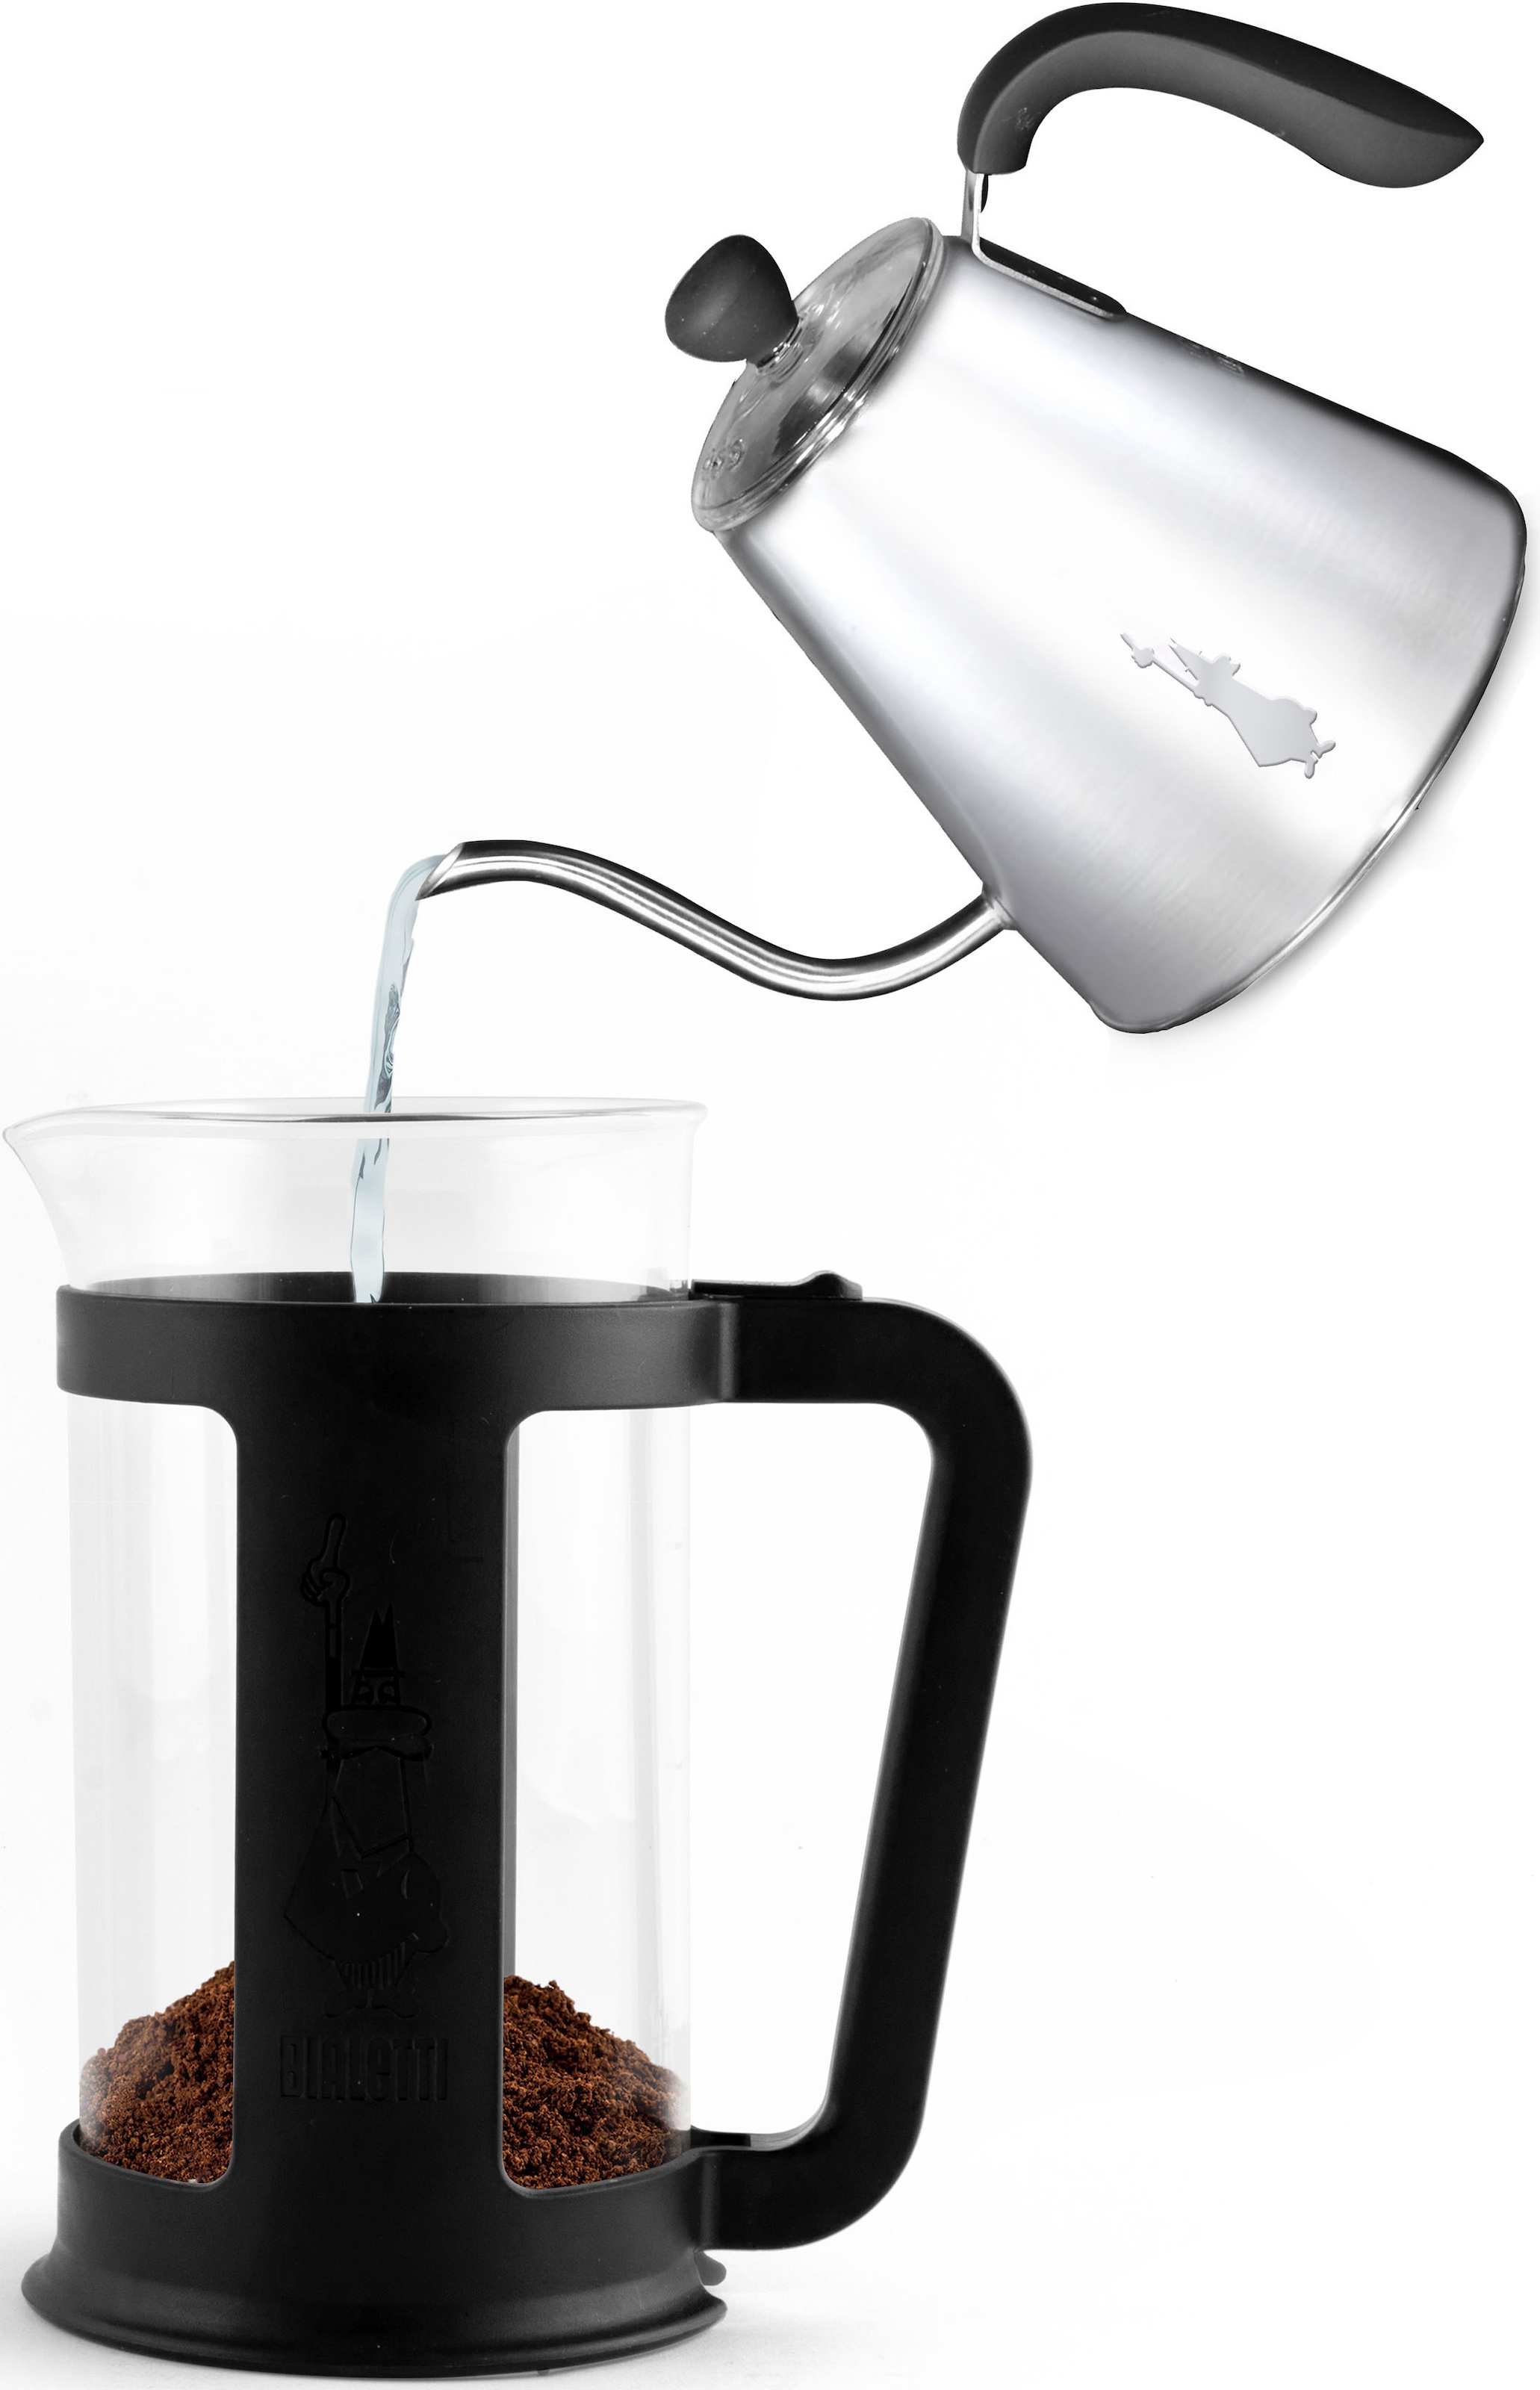 BIALETTI Kaffeebereiter »Smart«, 1 l Kaffeekanne, hitzebeständiges Borosilikatglas